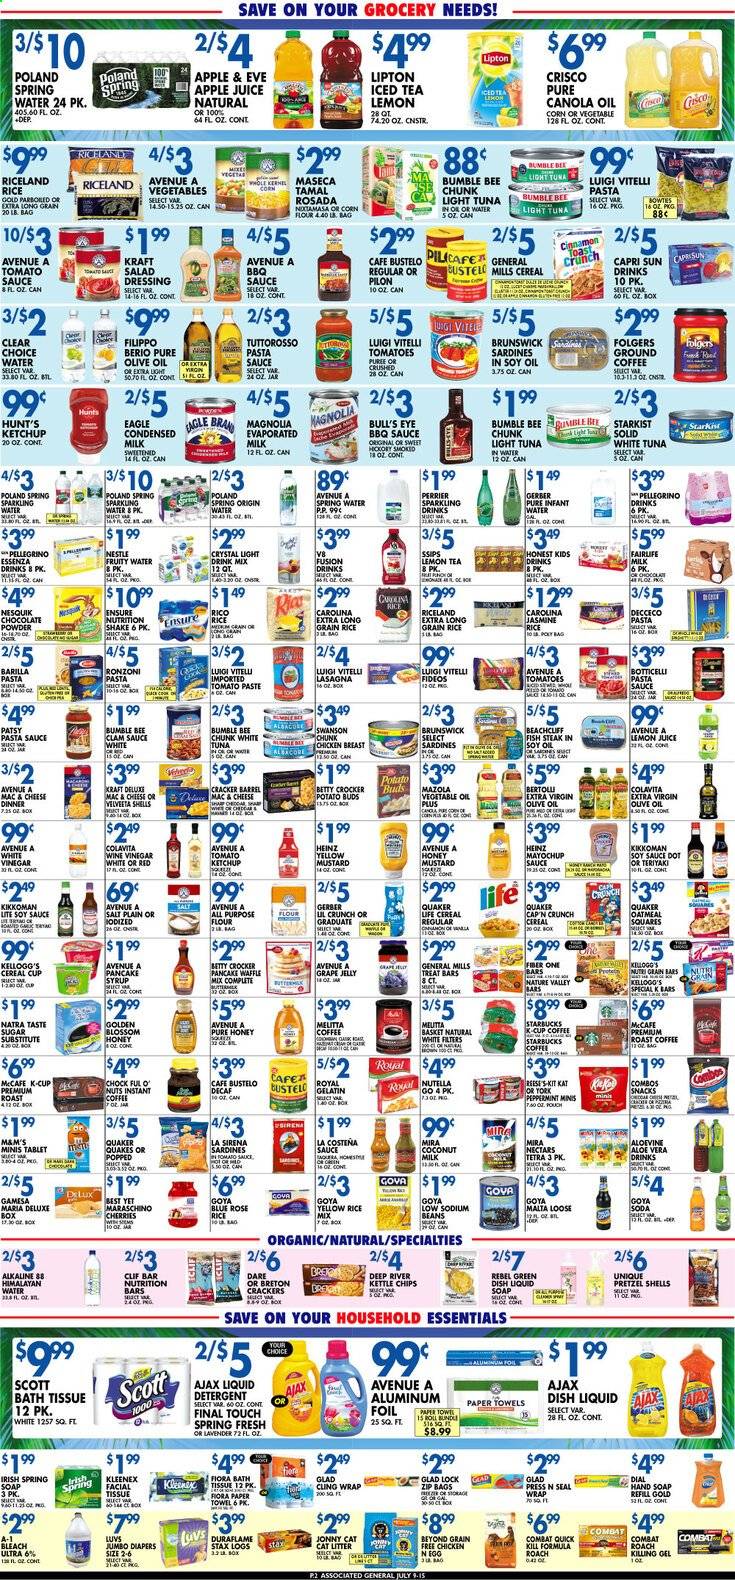 thumbnail - Associated Supermarkets Flyer - 07/09/2021 - 07/15/2021 - Sales products - pretzels, corn, tomatoes, sardines, tuna, fish, fish steak, StarKist, pasta sauce, Bumble Bee, sauce, Barilla, Quaker, lasagna meal, Kraft®, Nesquik, evaporated milk, condensed milk, shake, eggs, Blossom, Nestlé, Nutella, chocolate, snack, jelly, M&M's, crackers, Kellogg's, Gerber, chips, all purpose flour, Crisco, flour, oatmeal, coconut milk, tomato paste, tomato sauce, tuna in water, Heinz, light tuna, Goya, Maraschino cherries, cereals, nutrition bar, Cap'n Crunch, Fiber One, Nutri-Grain, jasmine rice, long grain rice, cinnamon, BBQ sauce, mustard, salad dressing, soy sauce, honey mustard, ketchup, Kikkoman, dressing, canola oil, extra virgin olive oil, vegetable oil, wine vinegar, olive oil, grape jelly, pancake syrup, syrup, apple juice, Capri Sun, juice, Lipton, ice tea, Perrier, spring water, soda, sparkling water, San Pellegrino, Starbucks, instant coffee, Folgers, ground coffee, coffee capsules, L'Or, McCafe, K-Cups, rosé wine, chicken breasts, steak, nappies, bath tissue, Kleenex, Scott, kitchen towels, paper towels, detergent, bleach, Ajax, liquid detergent, dishwashing liquid, hand soap, Dial, soap, cat litter. Page 2.